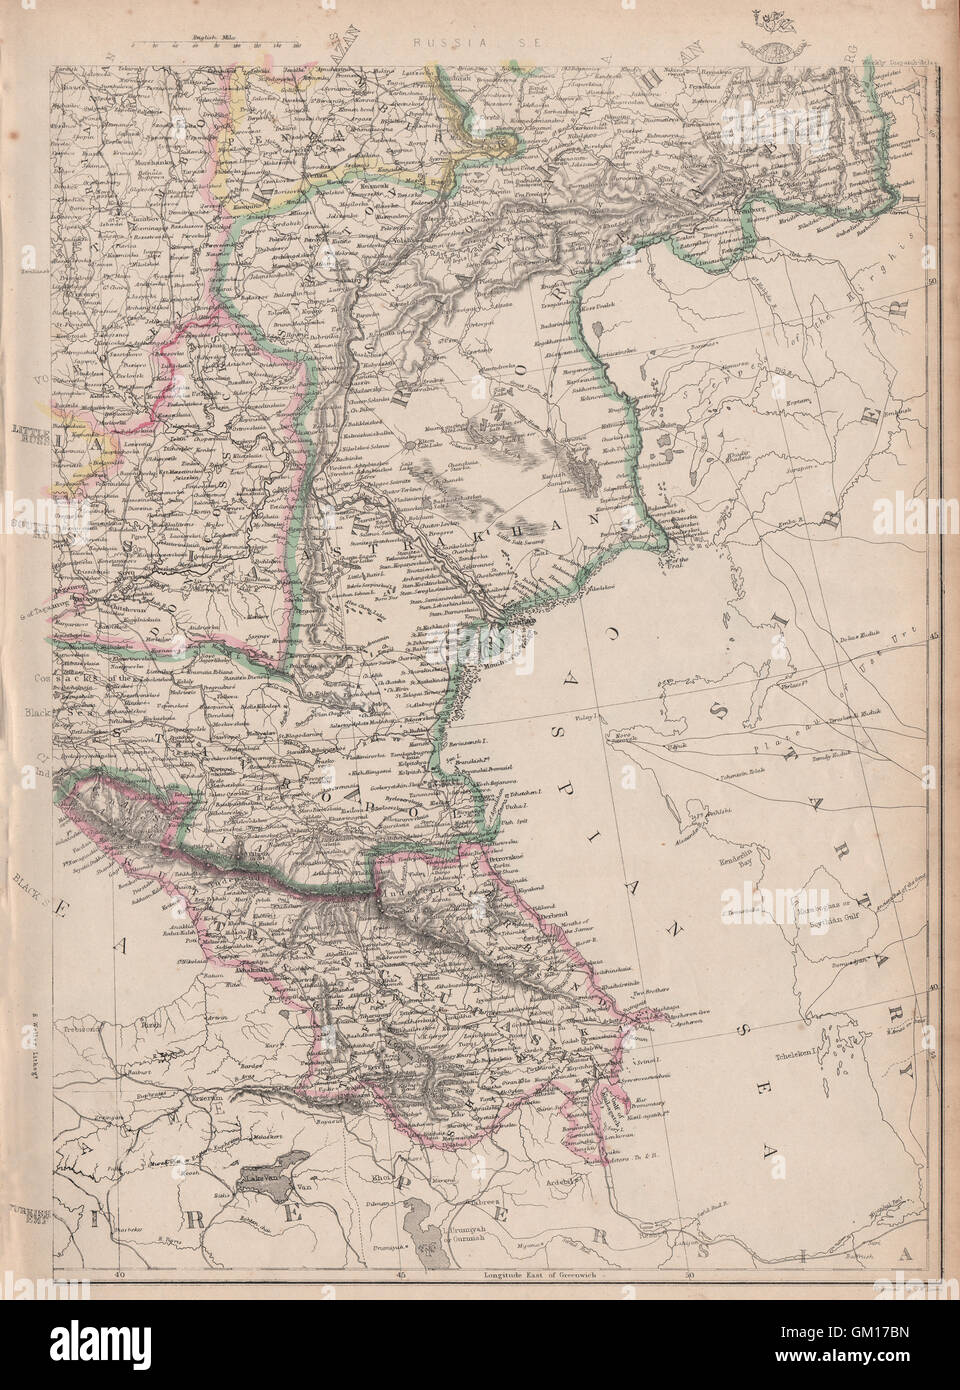 RUSSIA IN EUROPE SE.Transcaucasia Stavropol Astrakhan Caspian.JW LOWRY, 1863 map Stock Photo